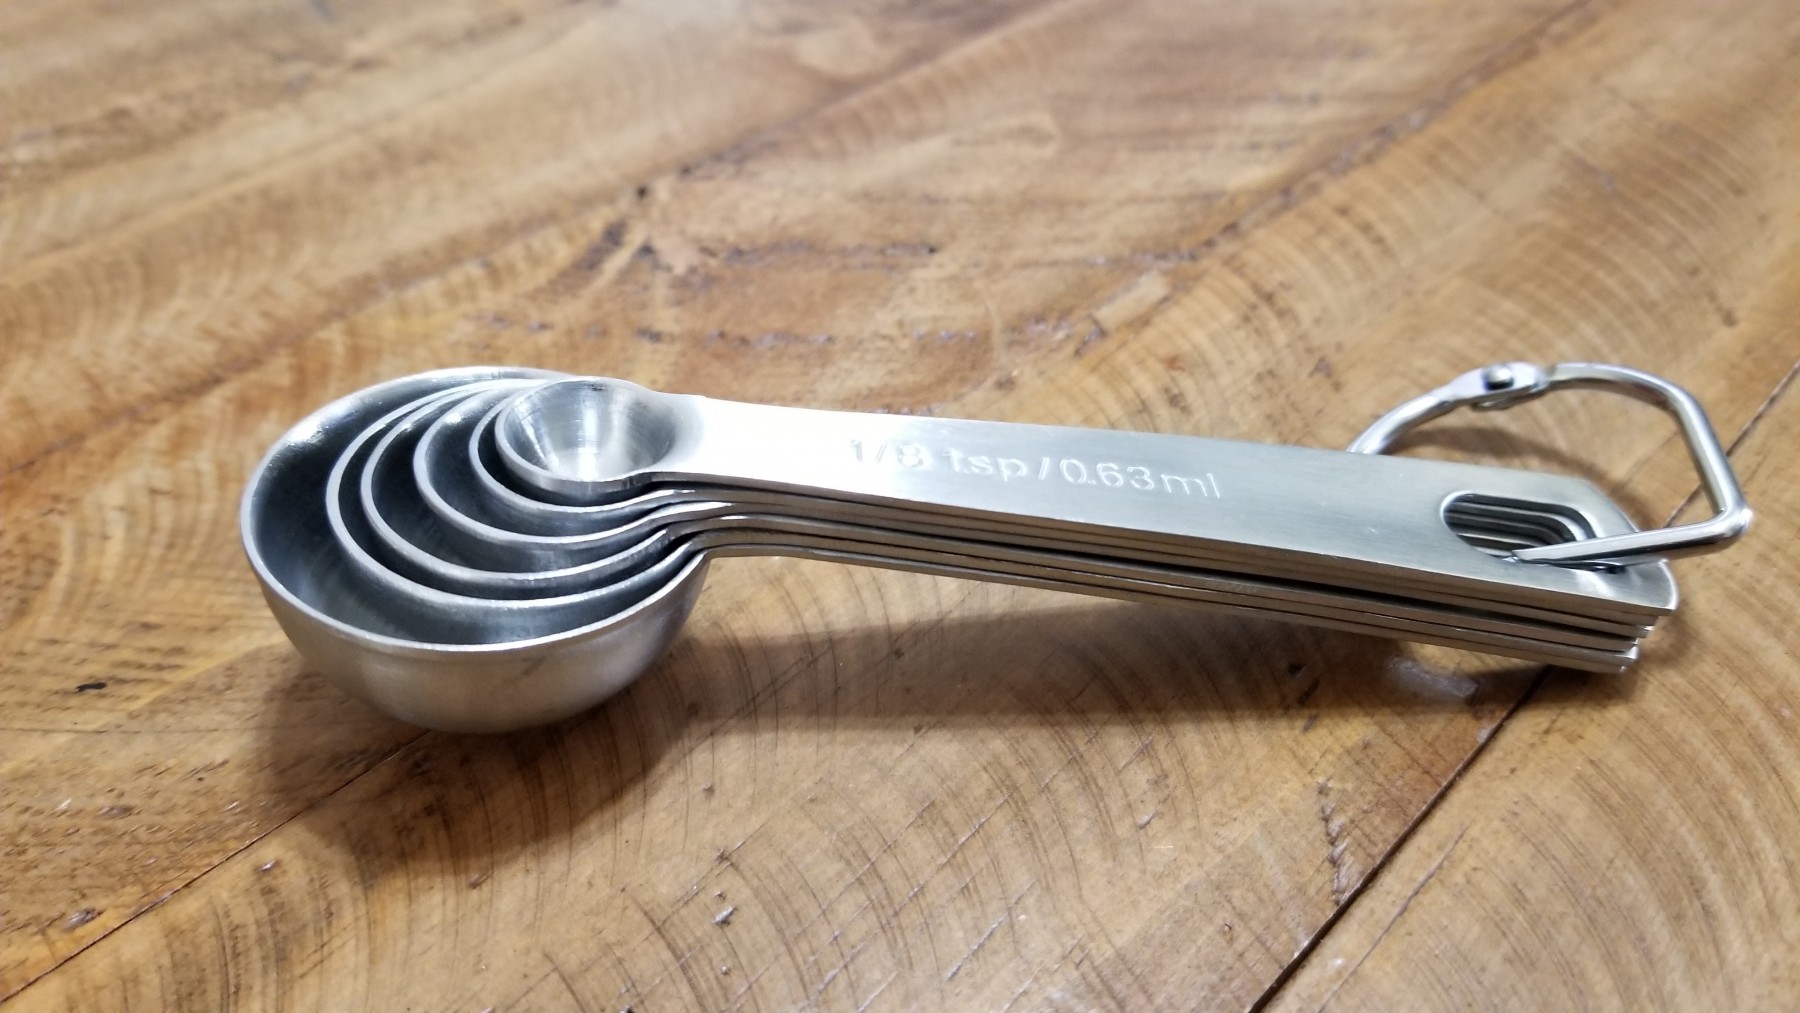 Nice spoons